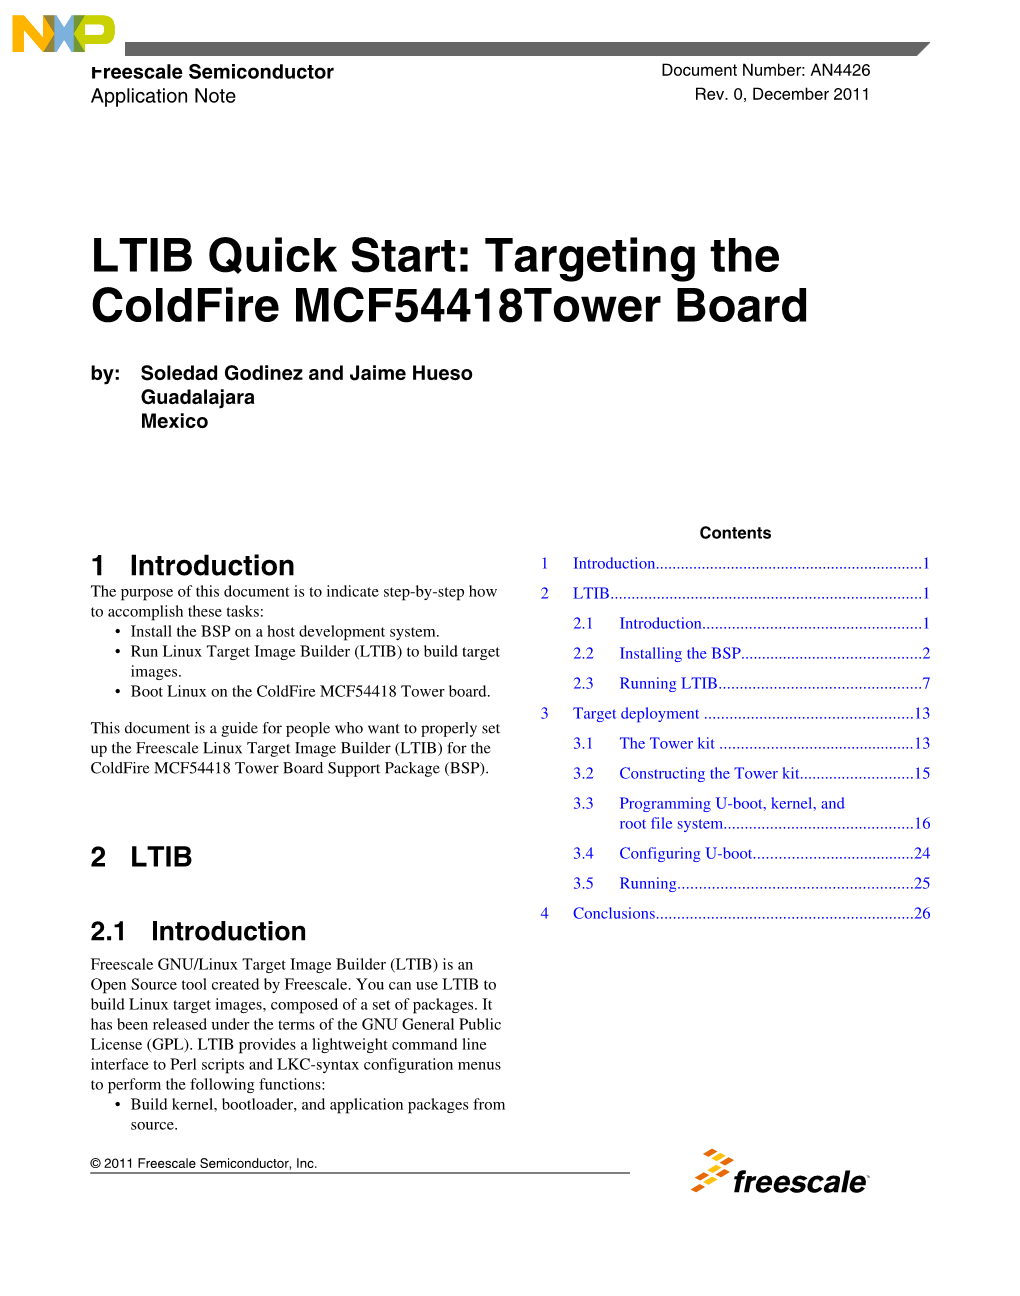 LTIB Quick Start: Targeting the Coldfire Mcf54418tower Board By: Soledad Godinez and Jaime Hueso Guadalajara Mexico